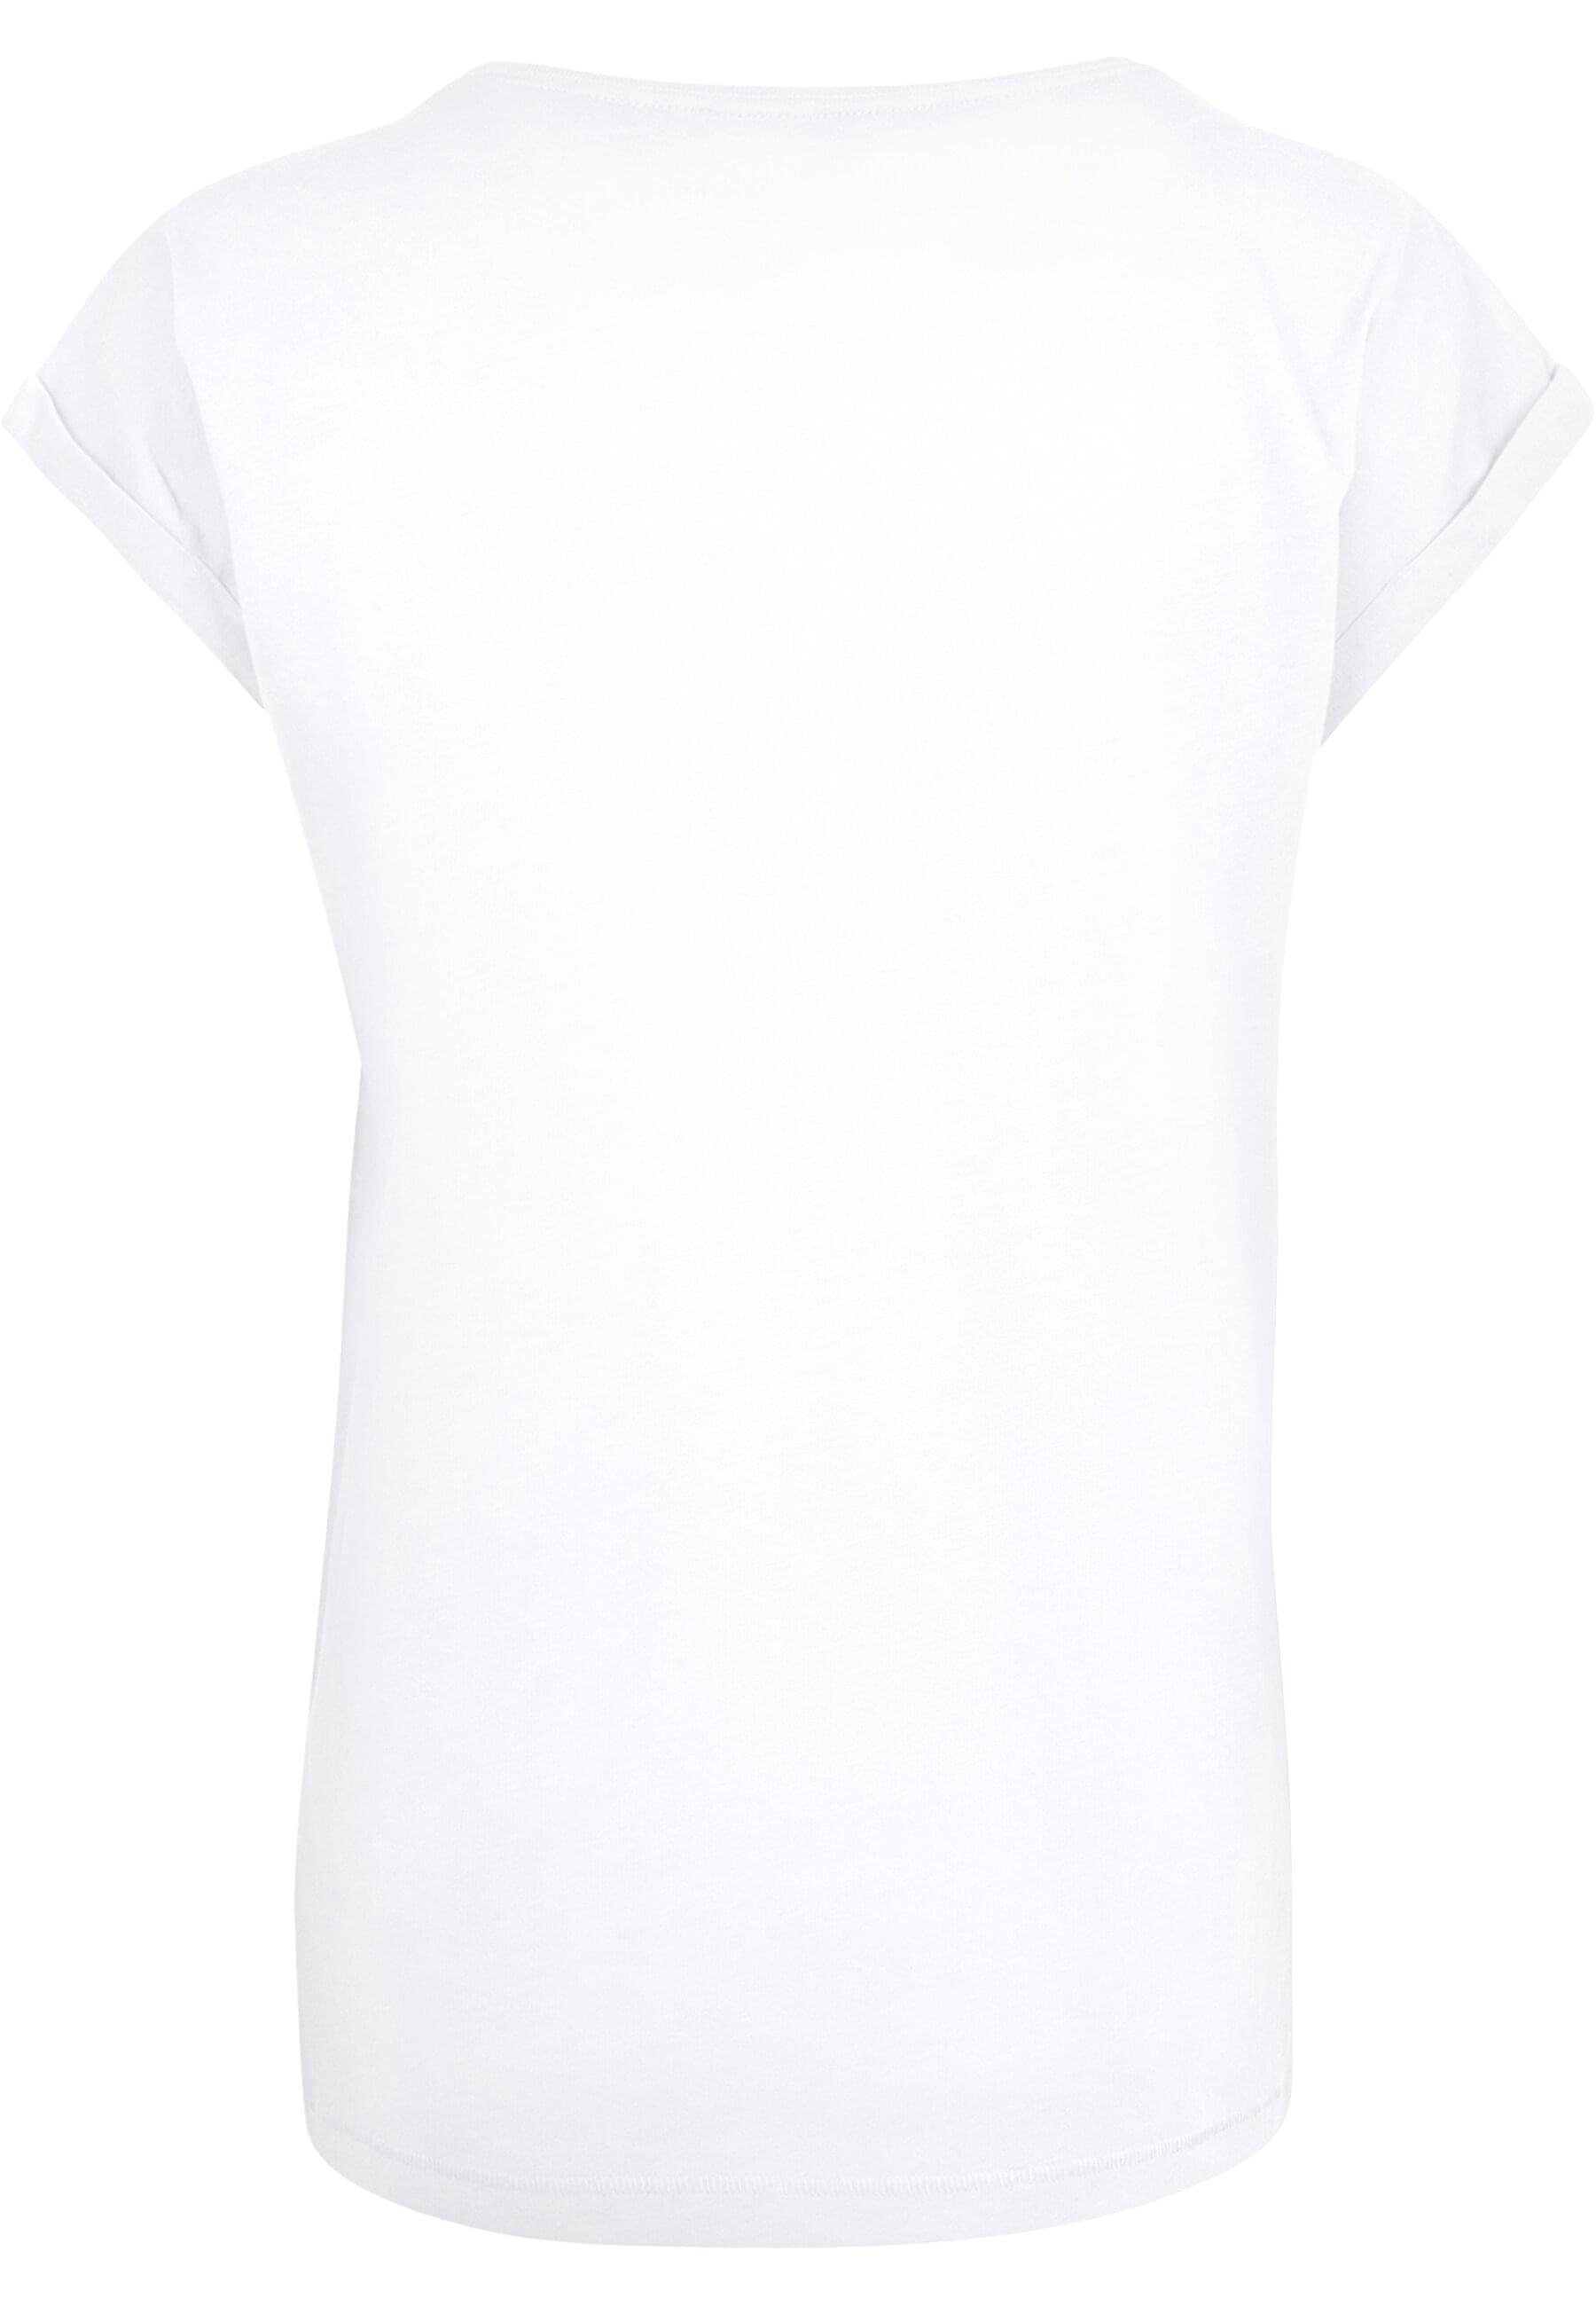 Merchcode T-Shirt Damen (1-tlg) LA Ladies LA T-Shirt LAYLA white